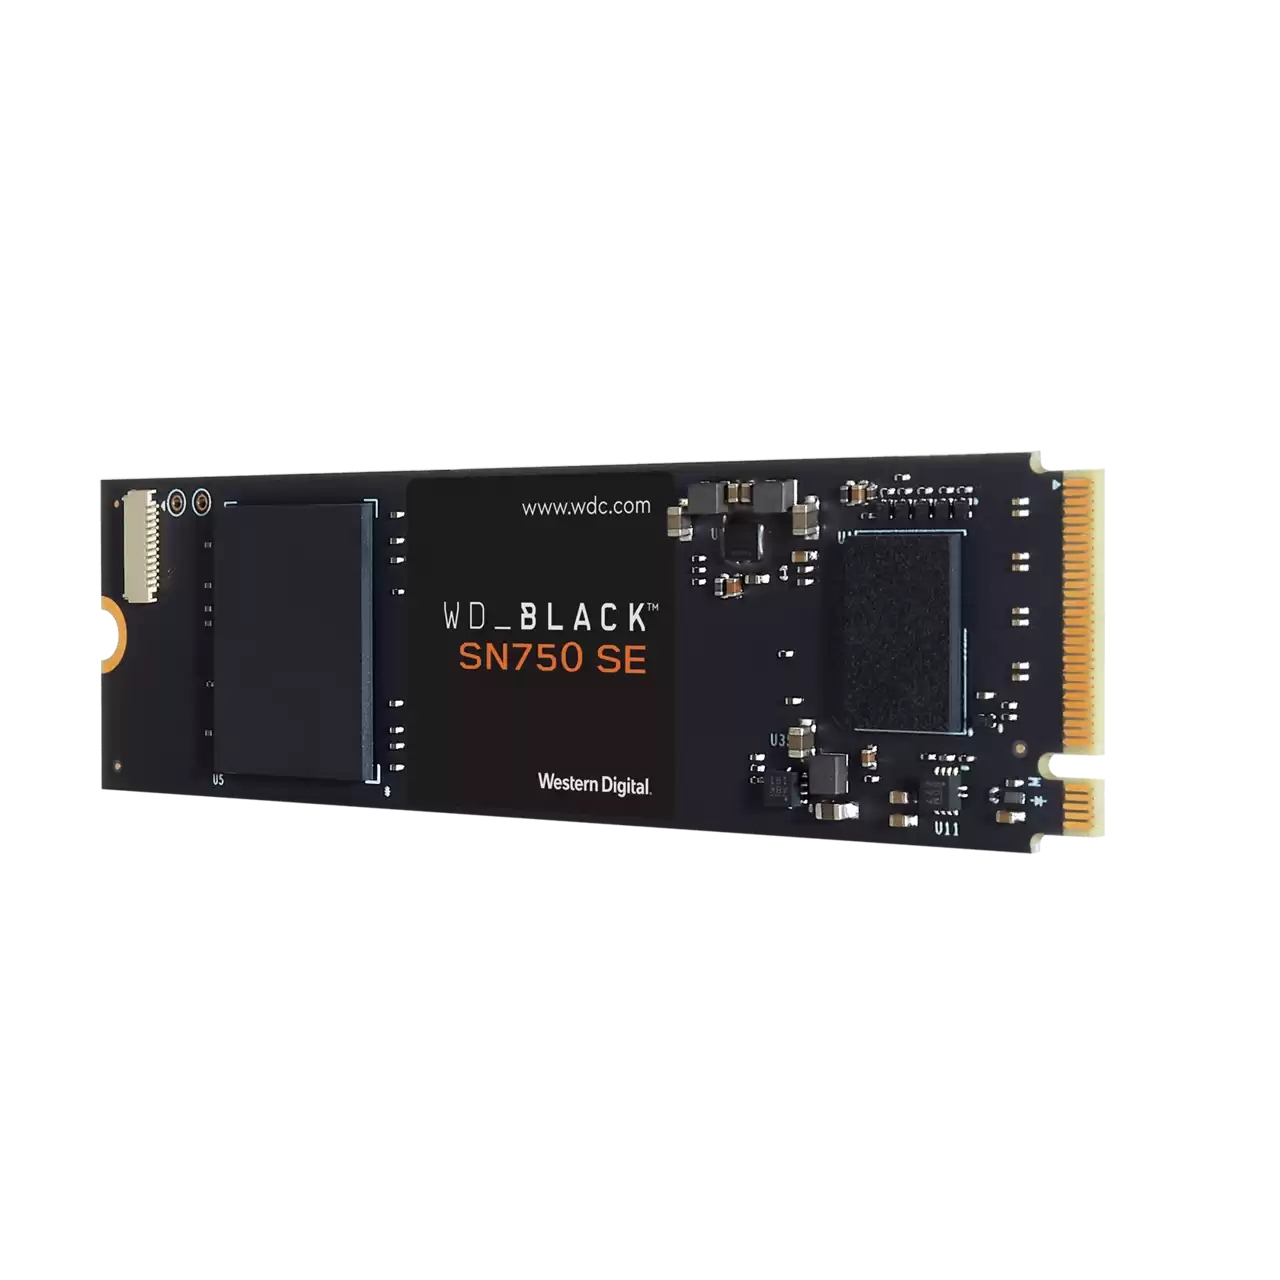 WD WD_Black SN750 SE High-Performance NVMe M.2 interne Gaming SSD 250